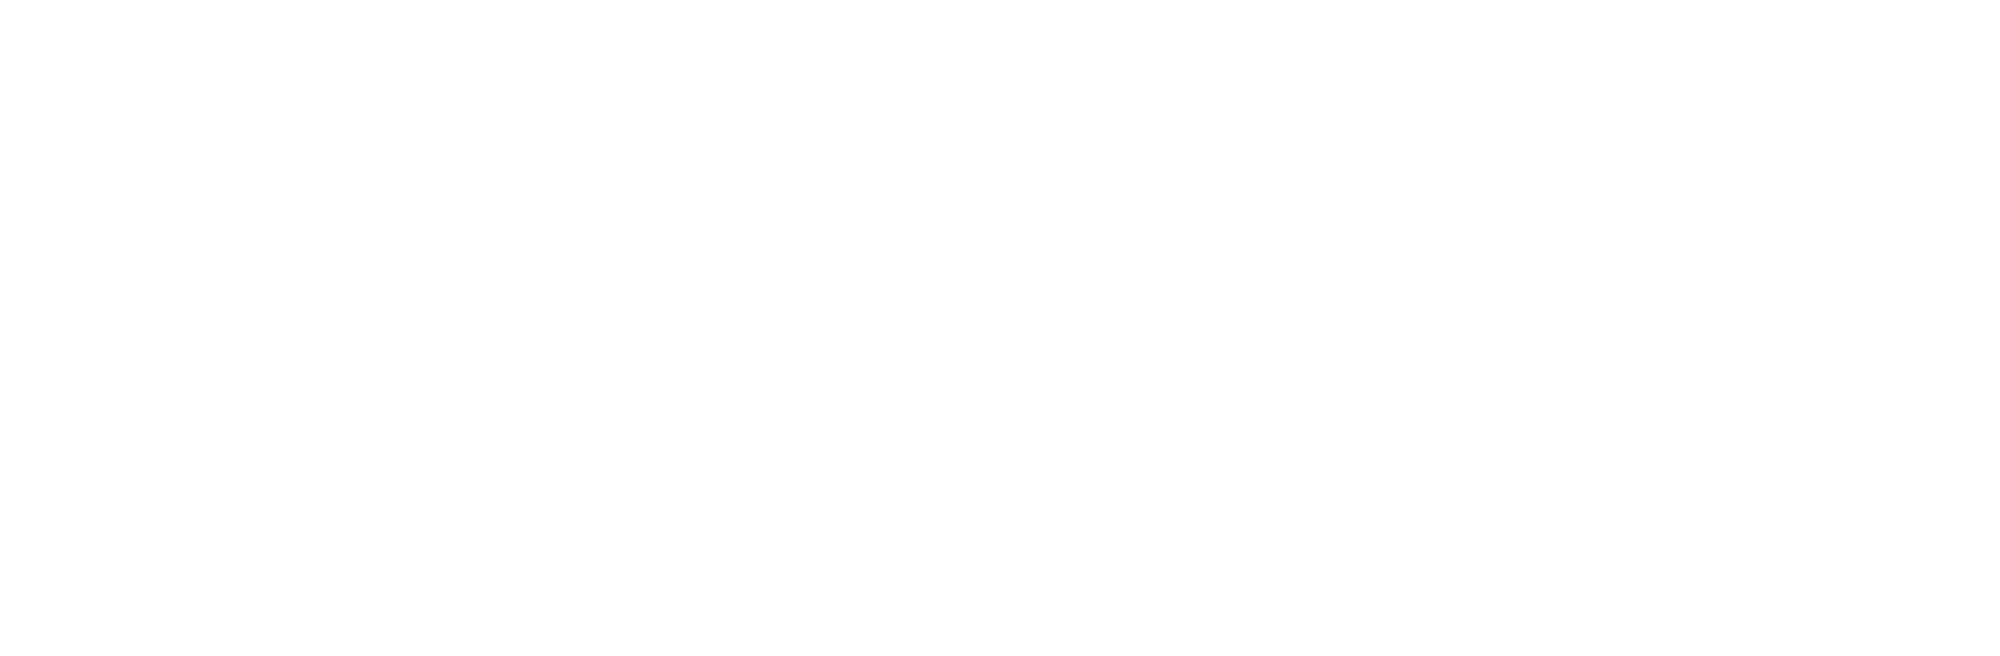 Best Juicer Lab